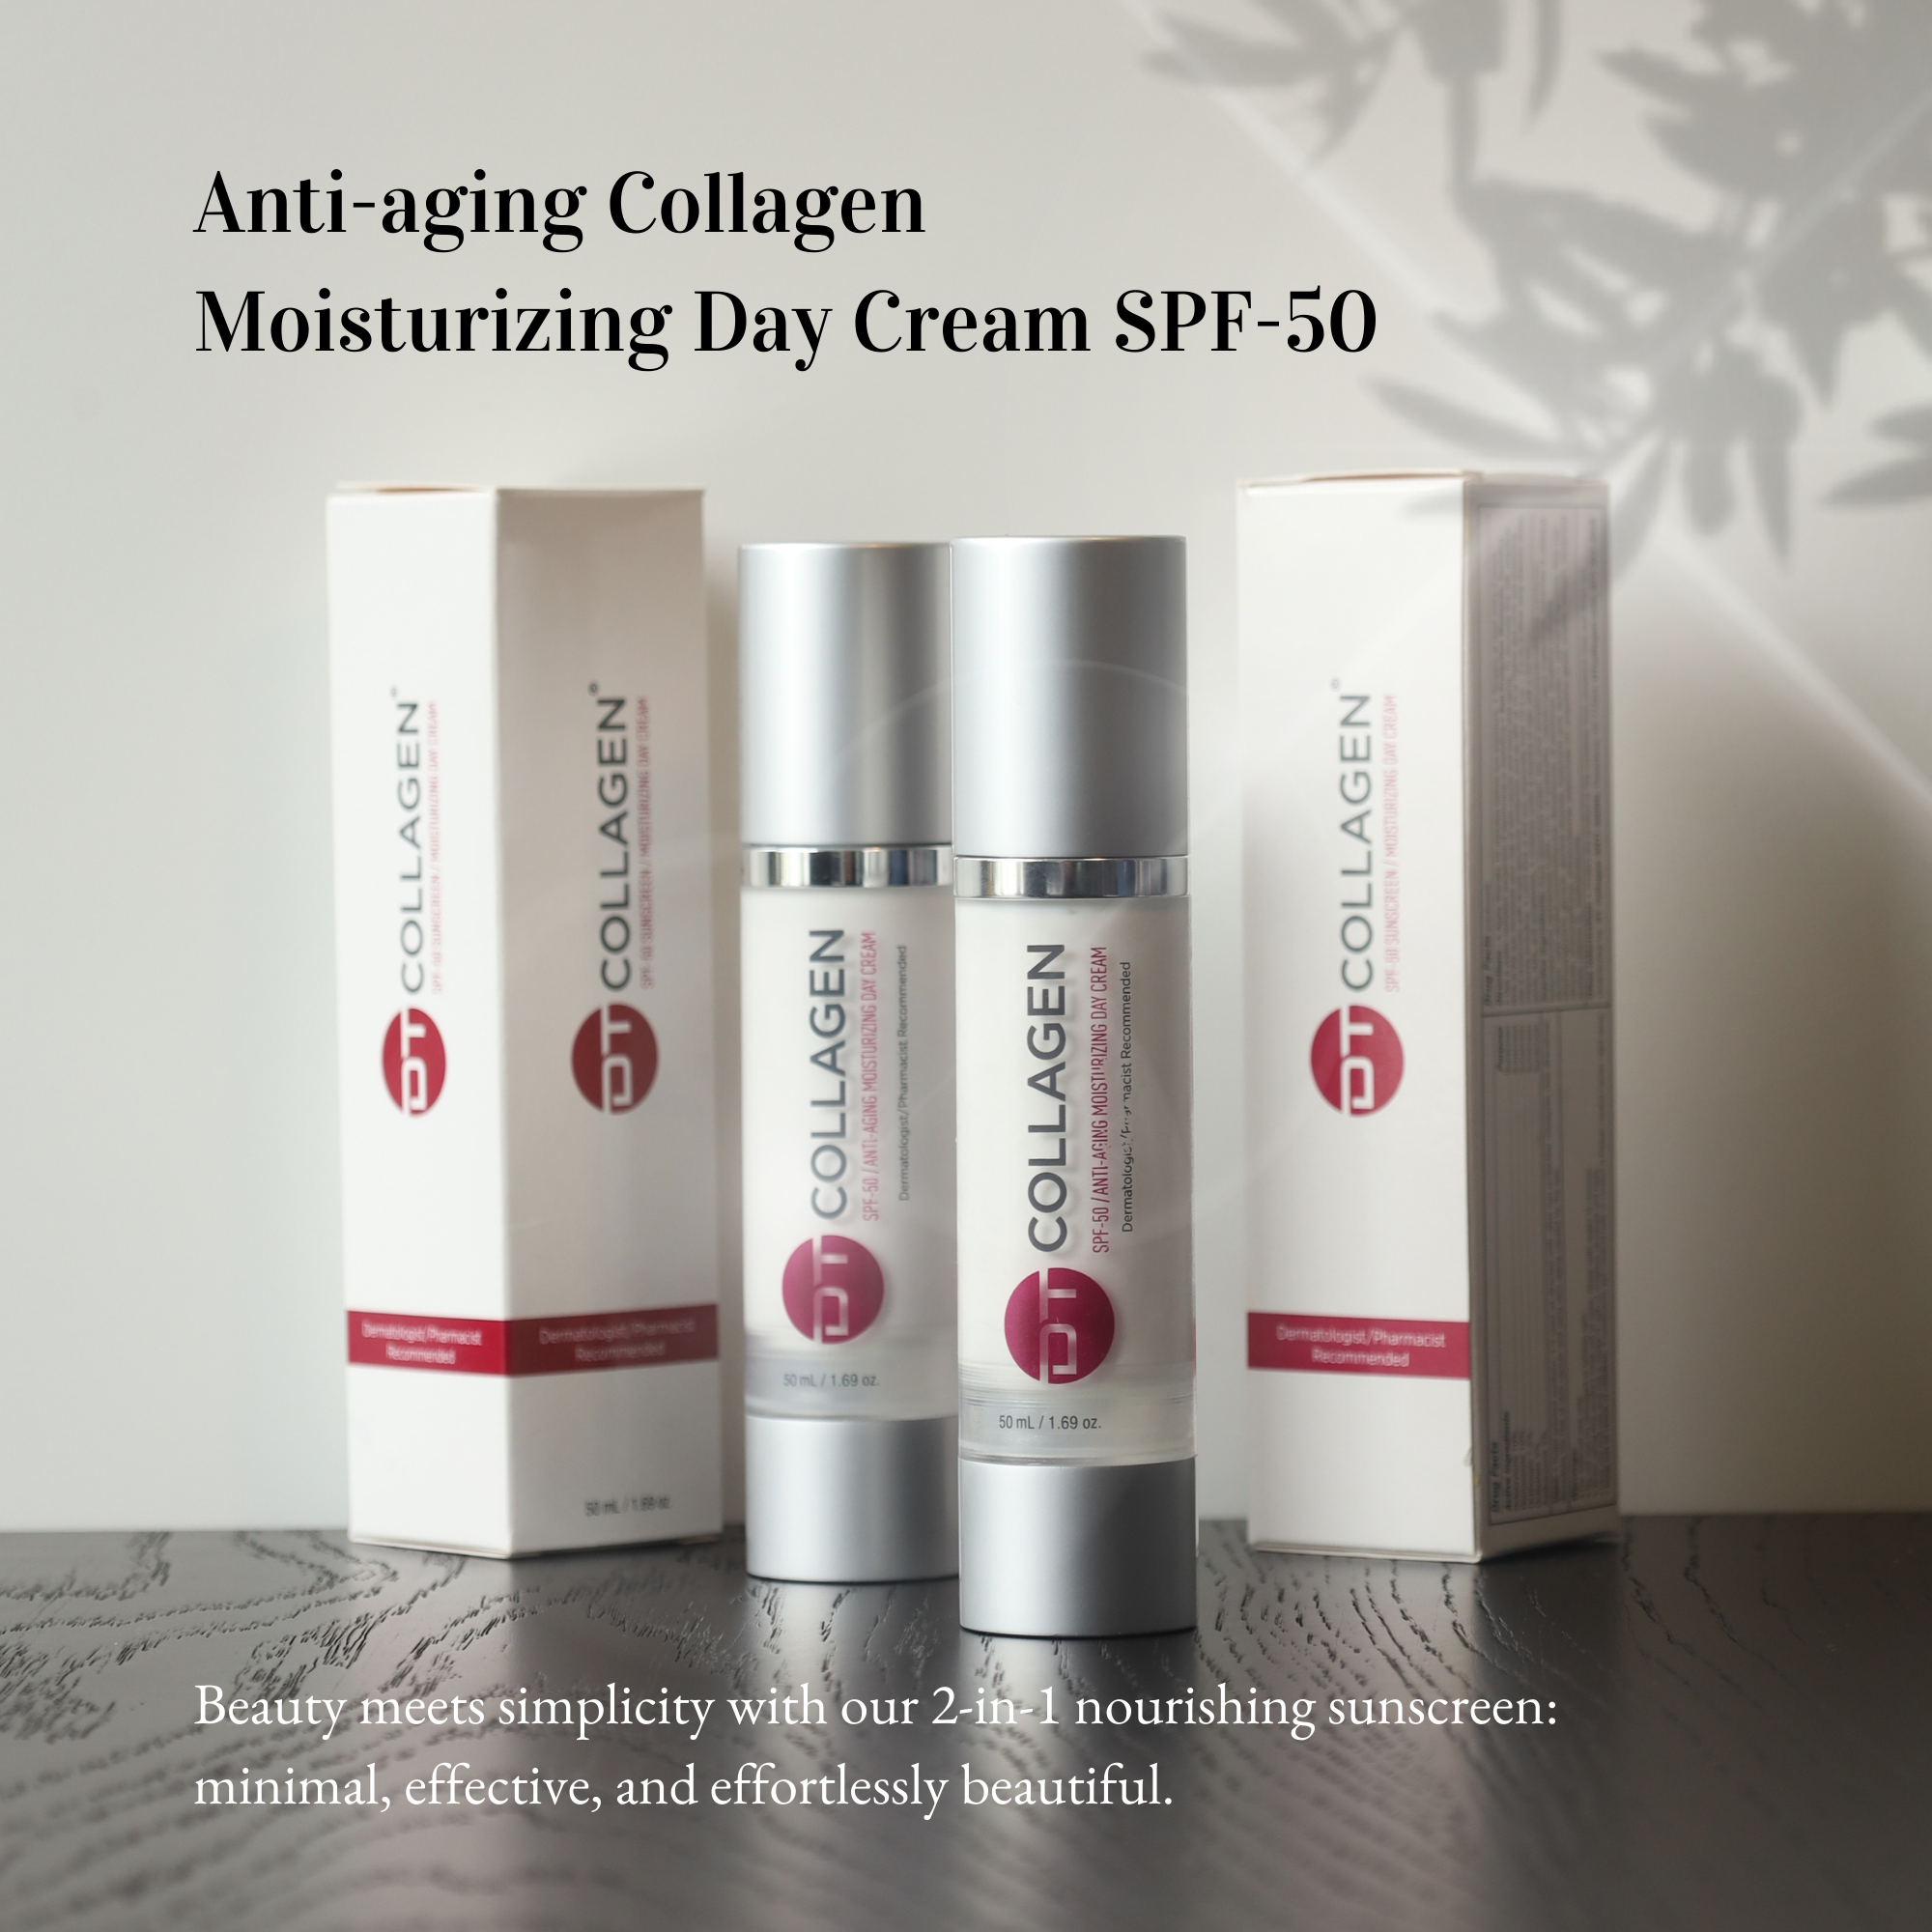 Anti-aging Collagen Moisturizing Day Cream